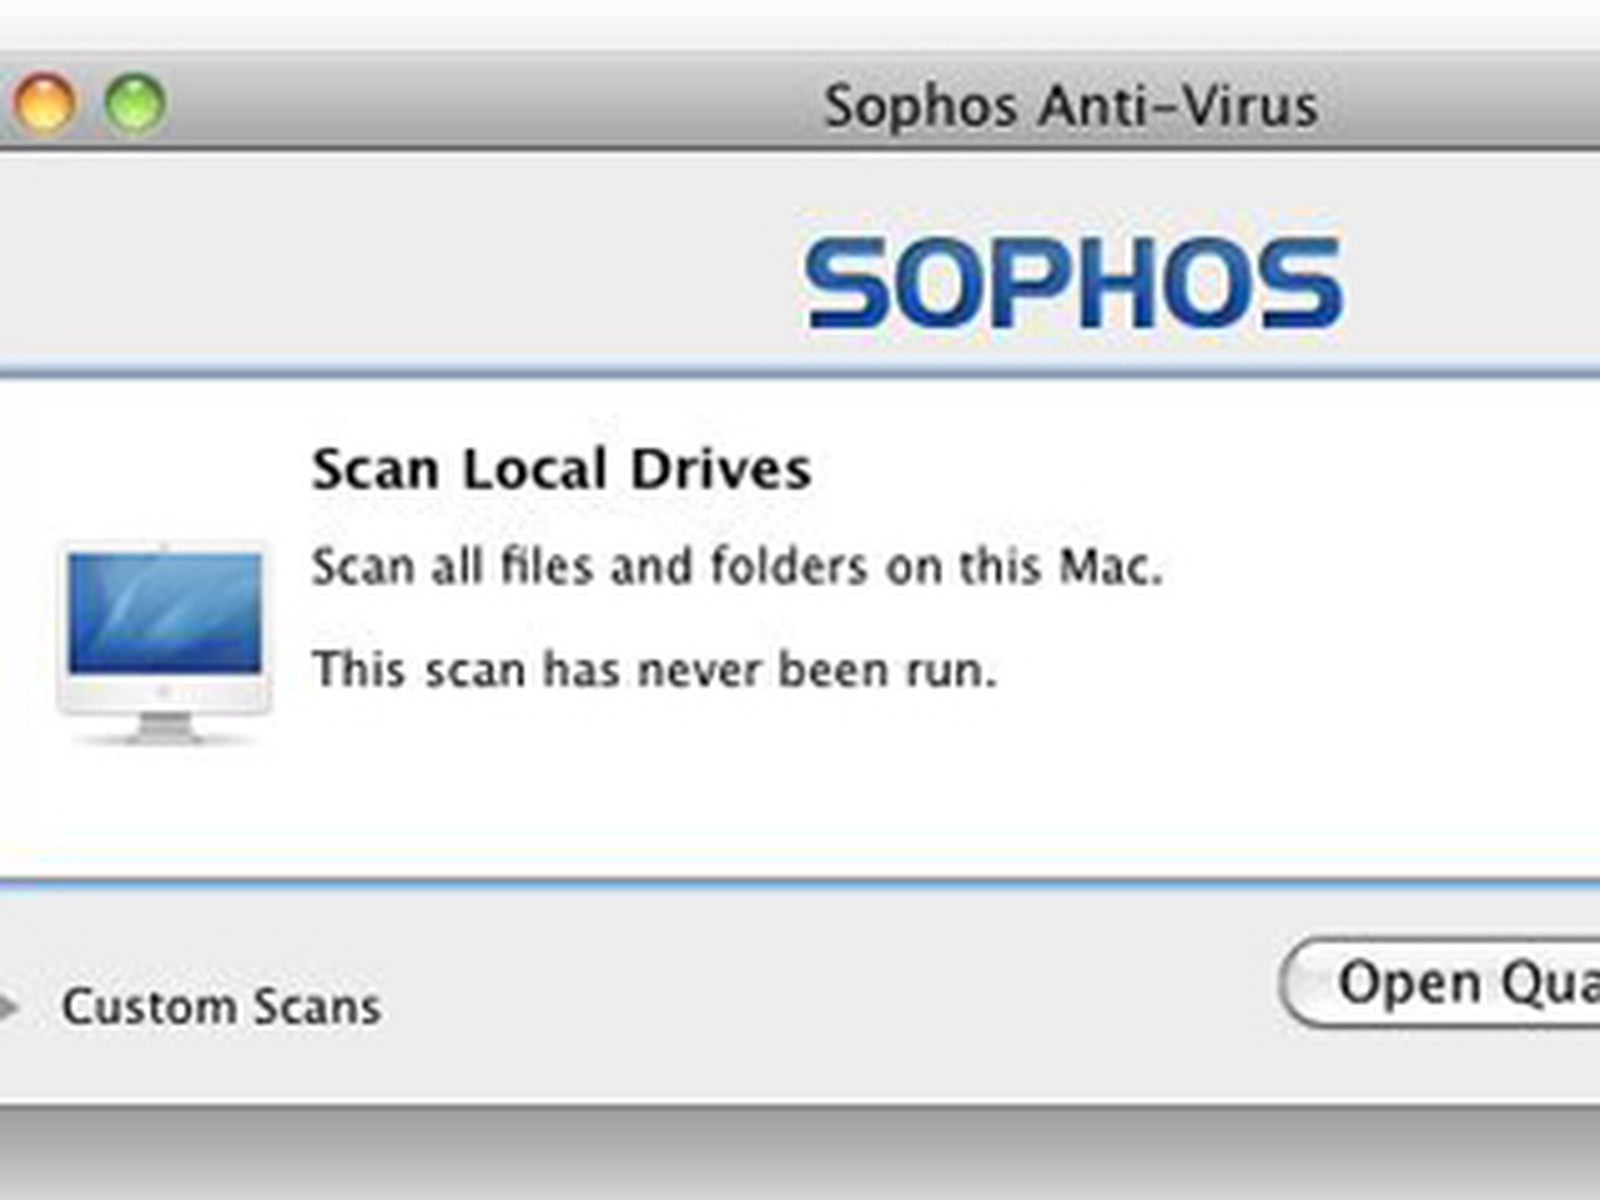 sophos antivirus for mac os x help